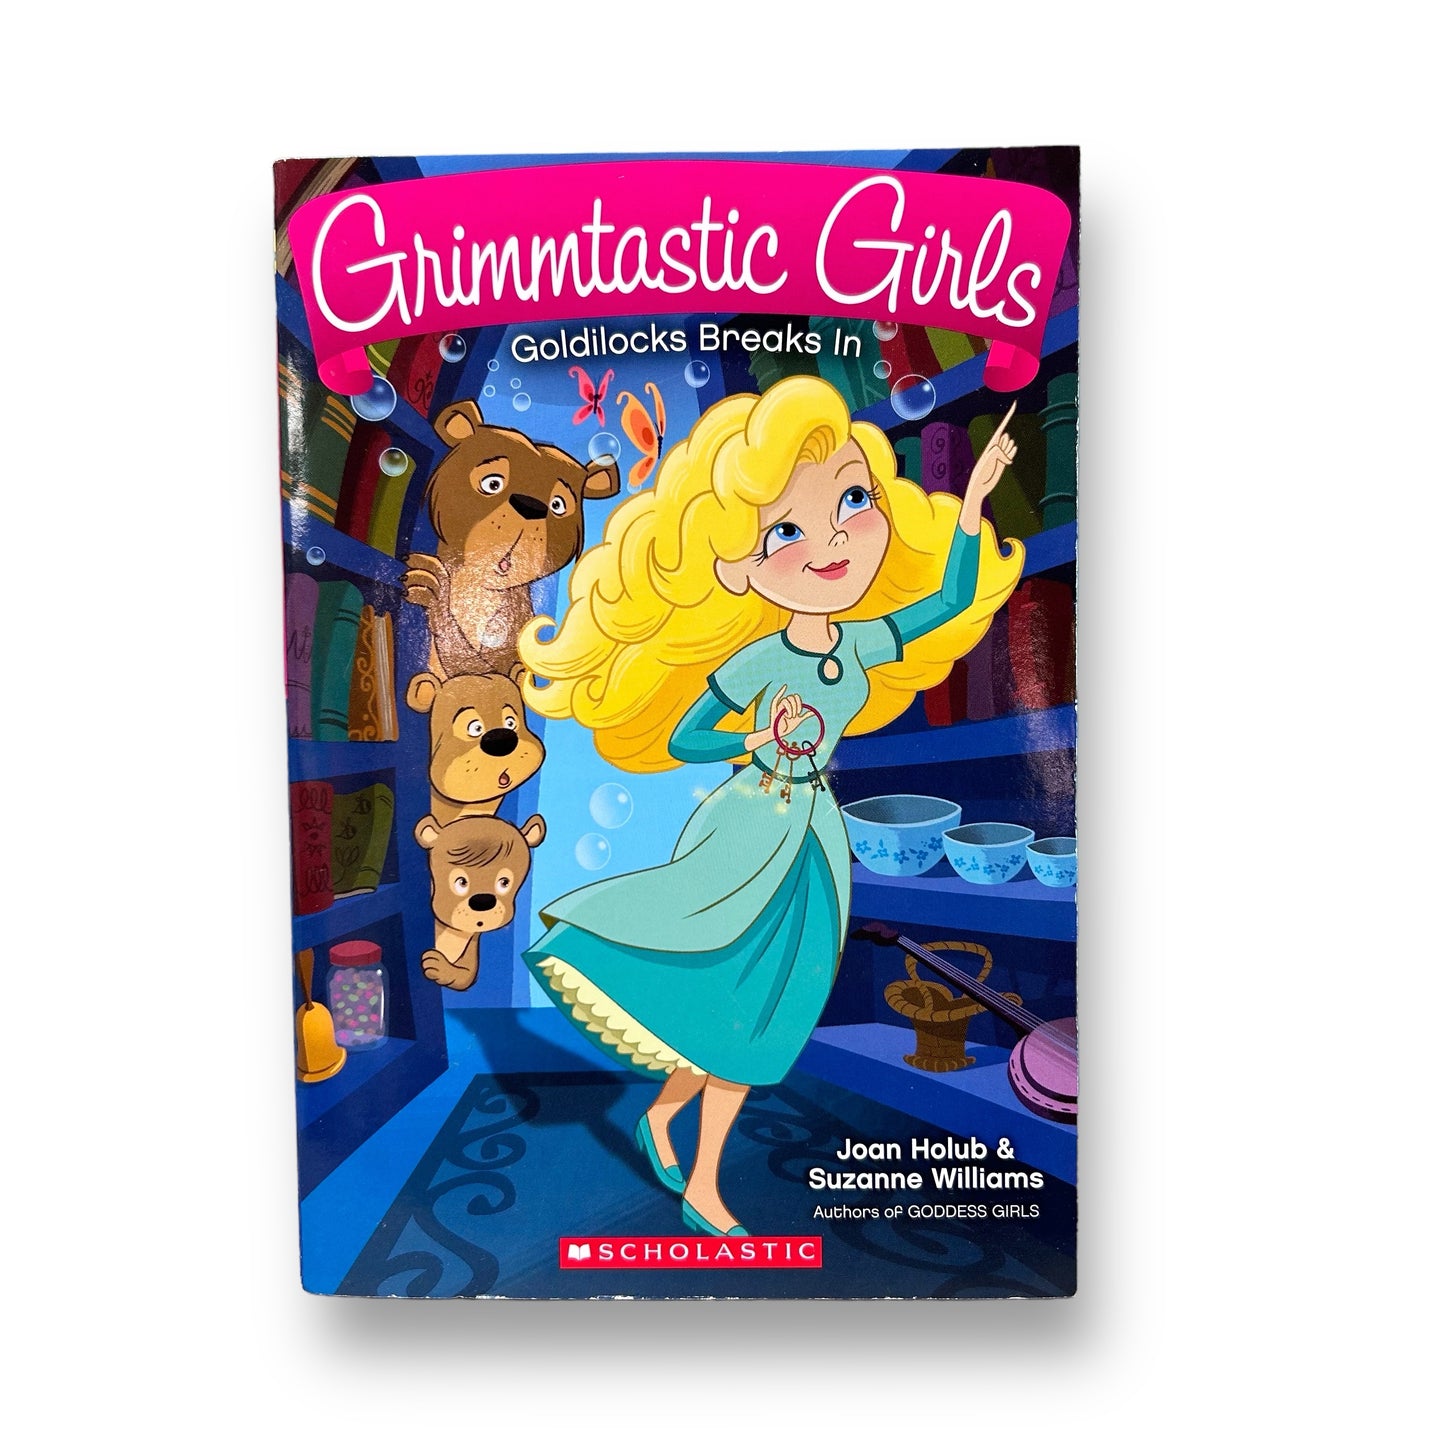 Grimmtastic Girls: Goldilocks Breaks In